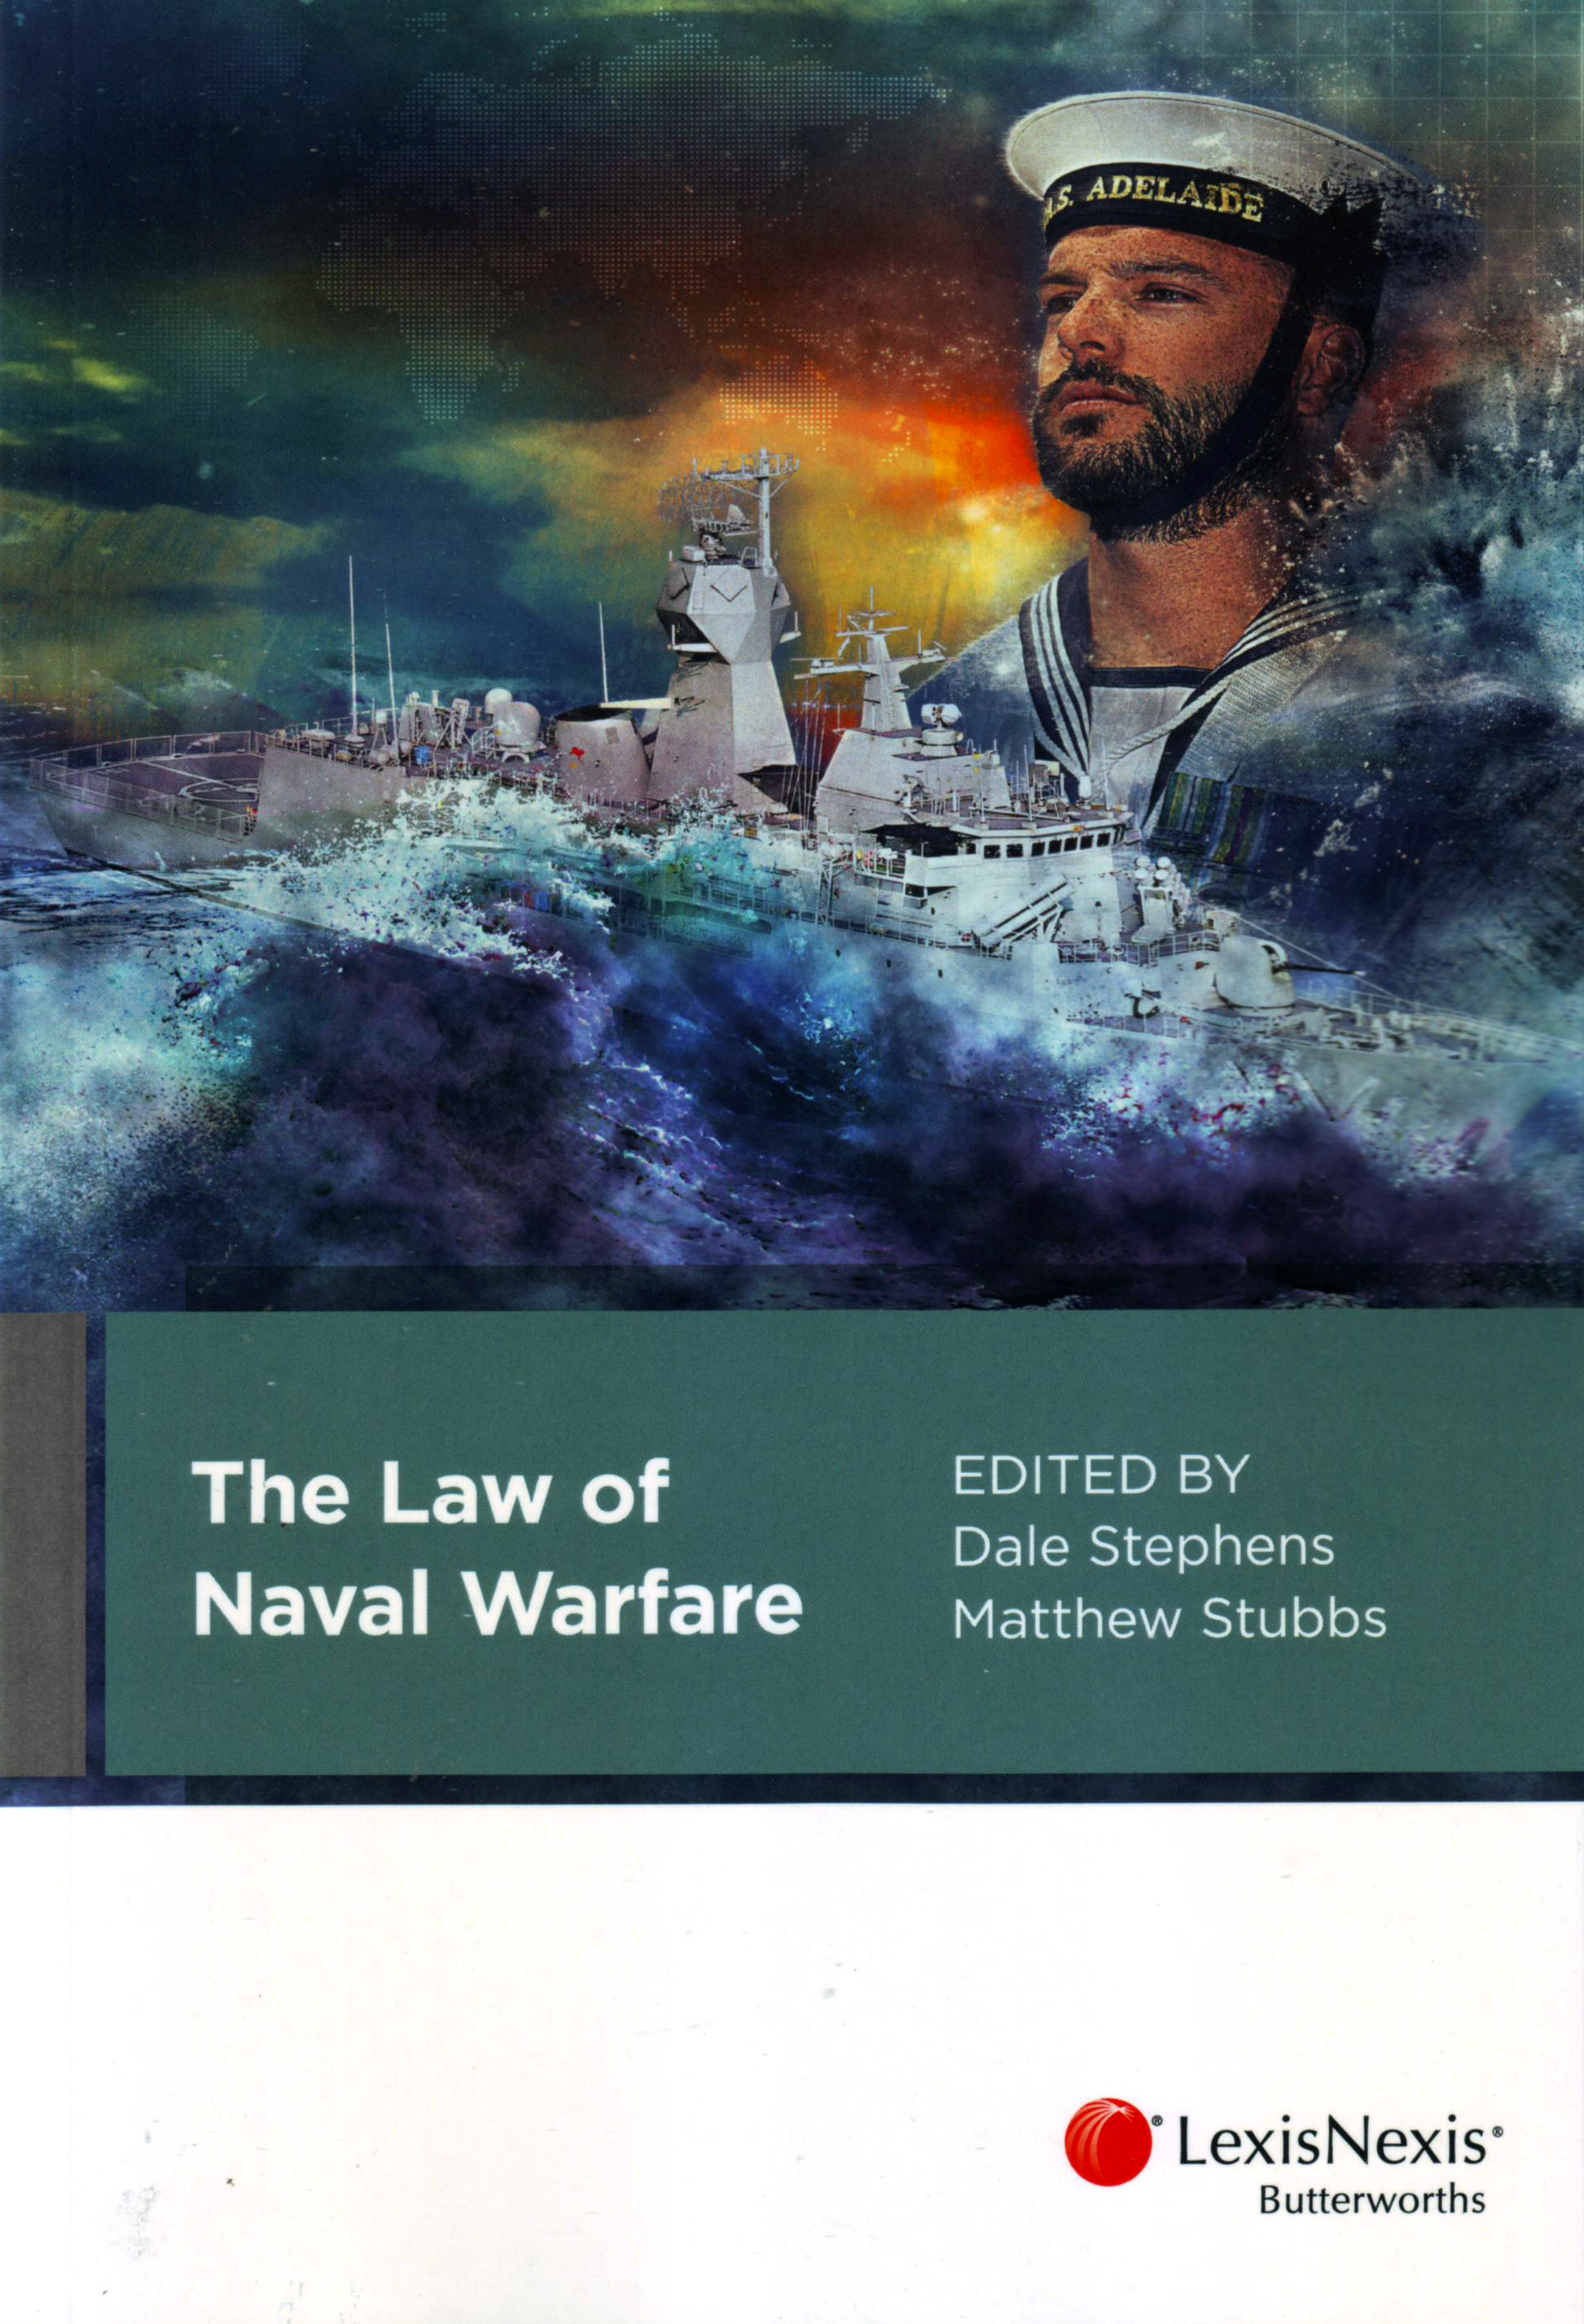 The Law of Naval Warfare